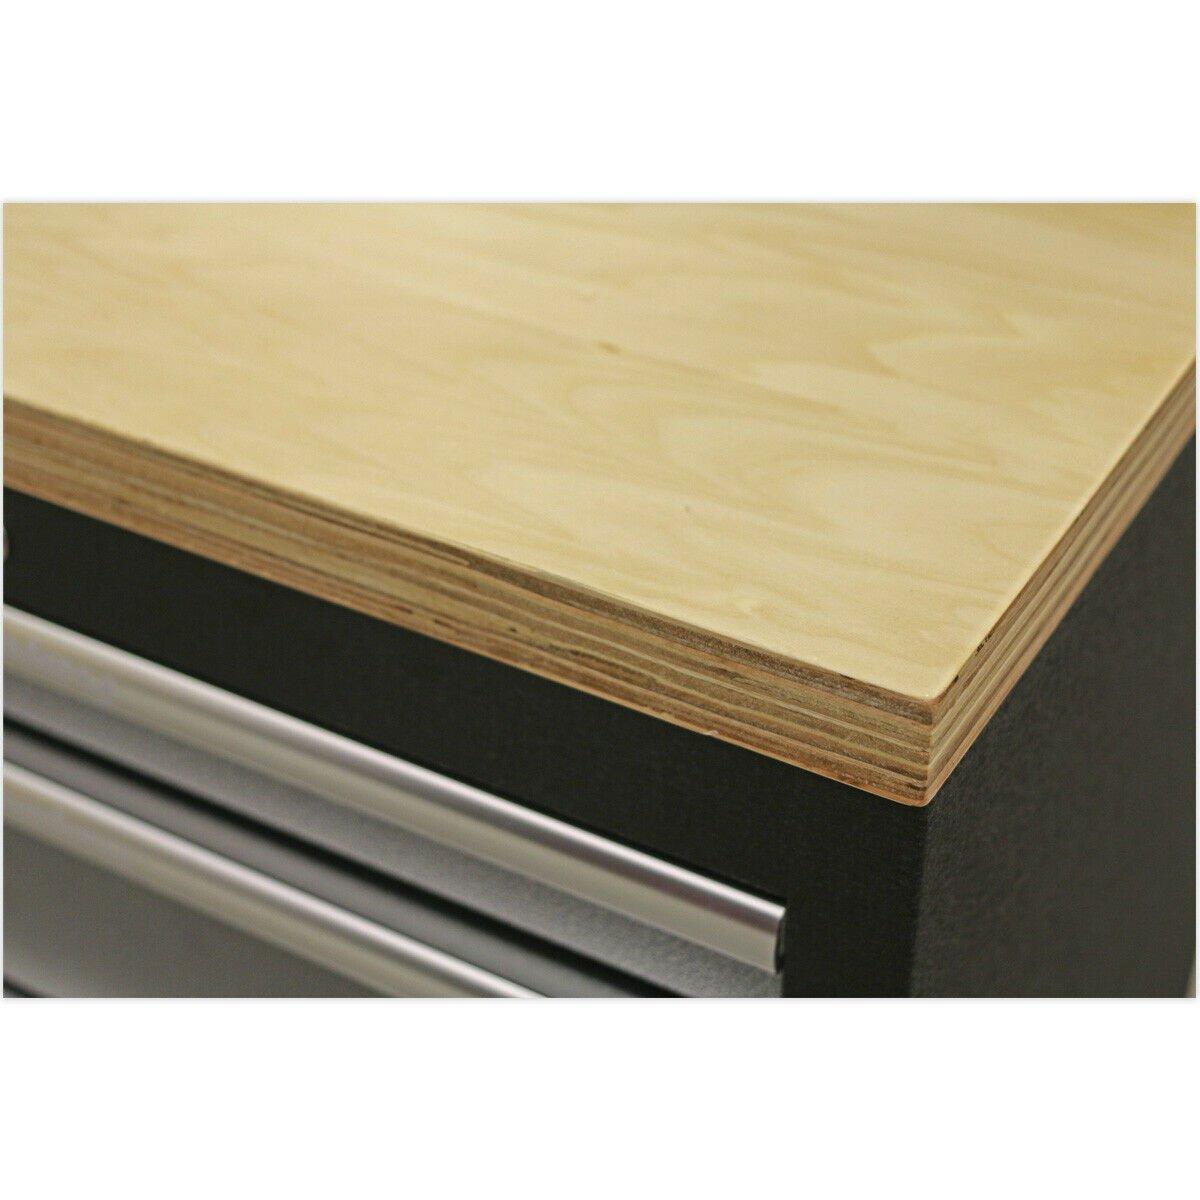 680mm Pressed Wood Worktop for ys02633 ys02634 ys02639 & ys02641 Cabinets